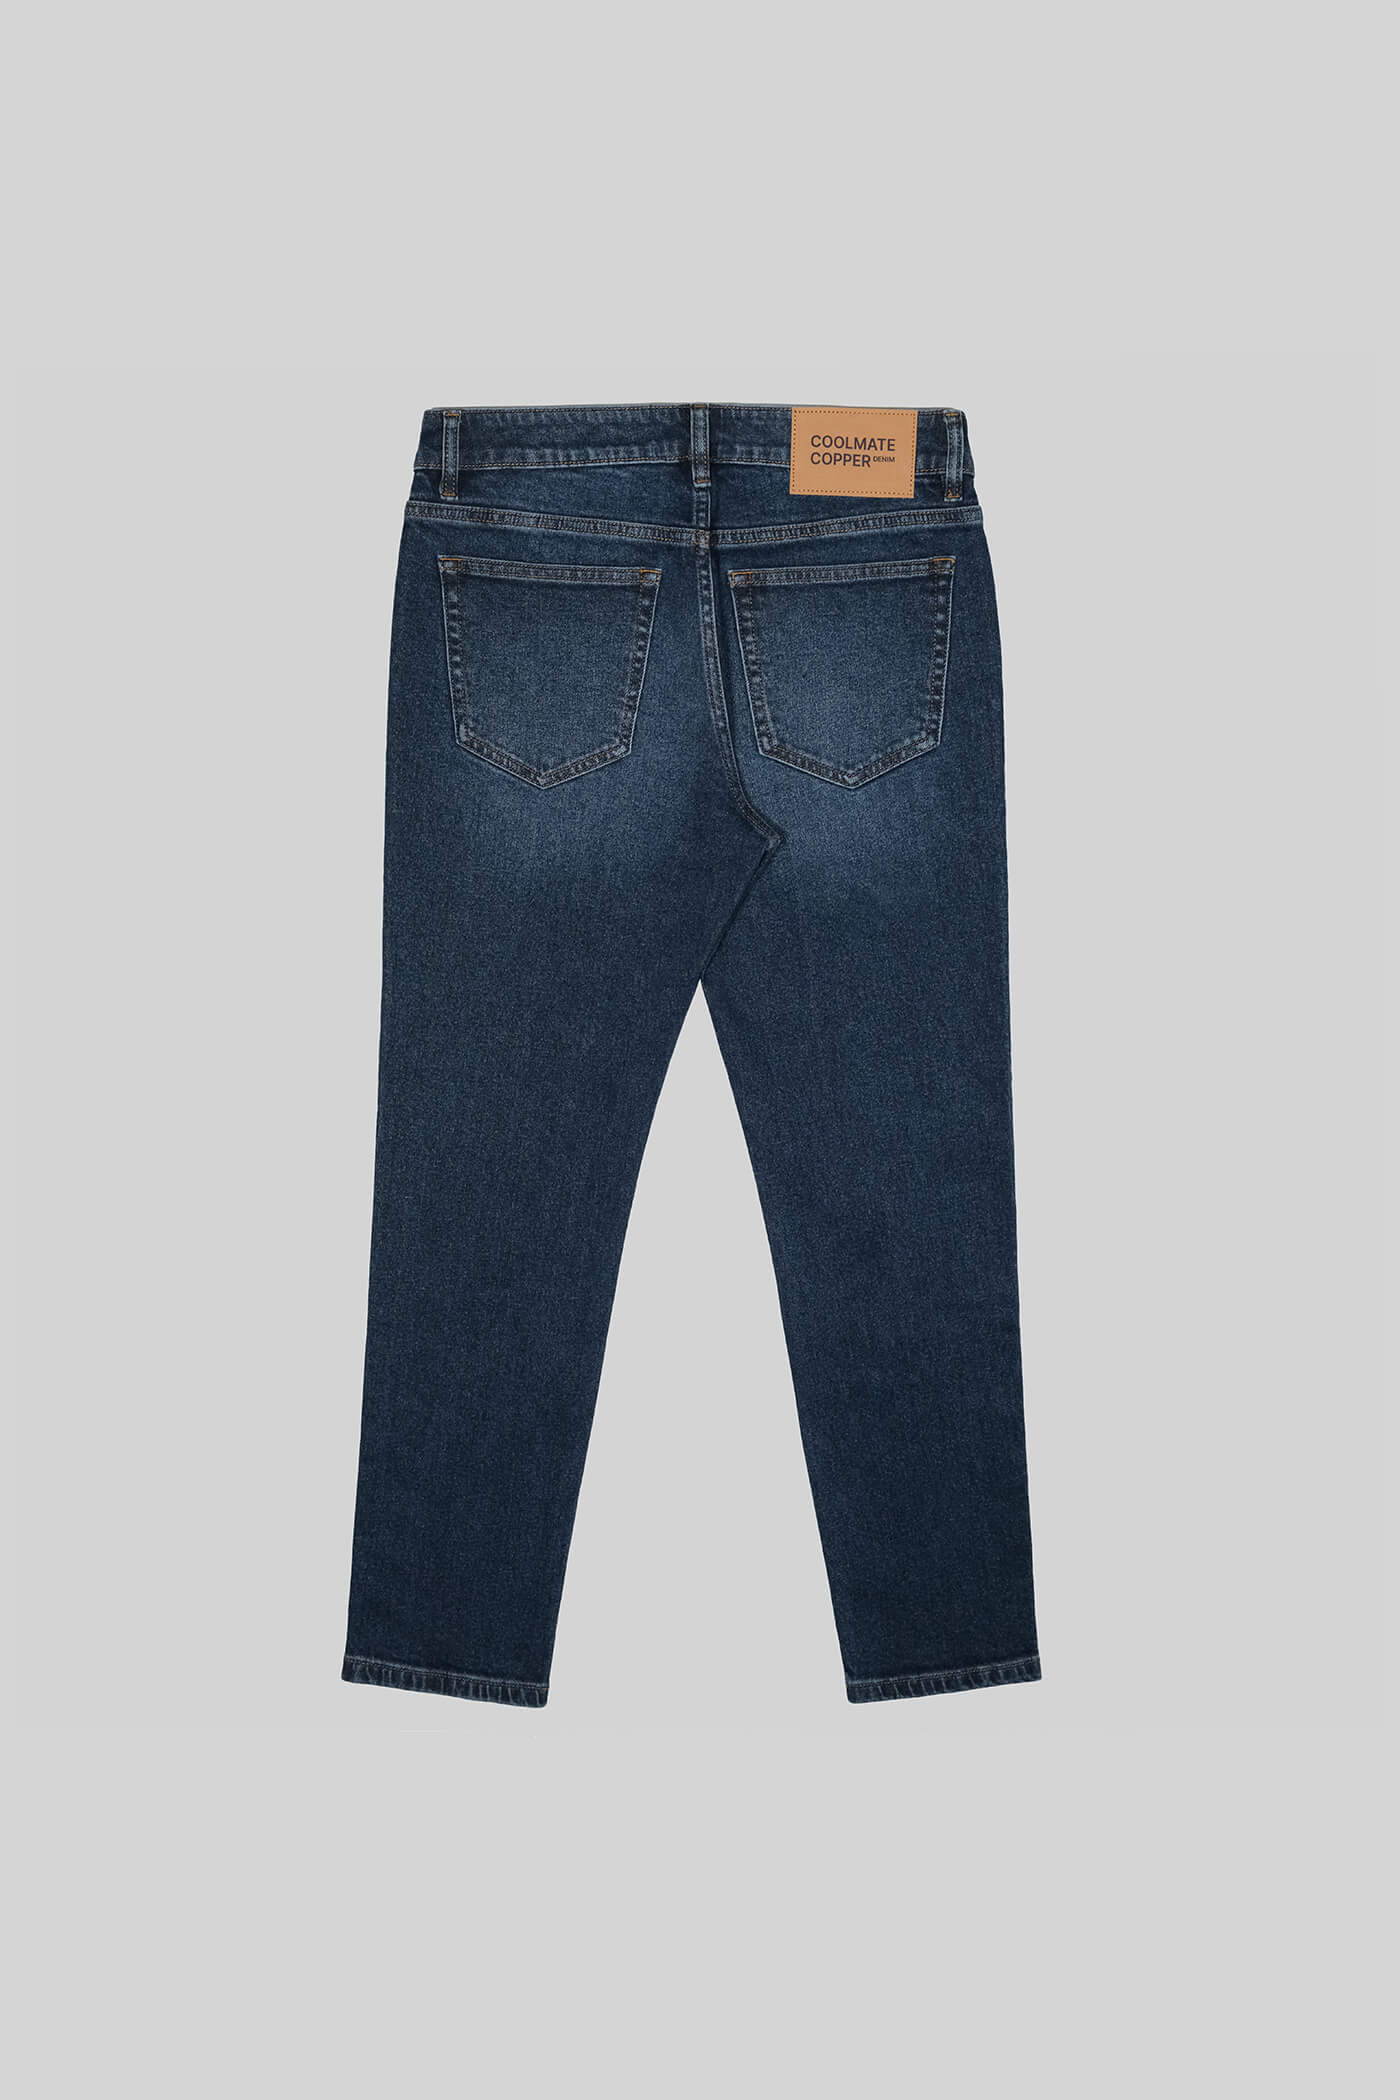 Coolmate x Copper Denim | Quần Jeans dáng Slim Fit xanh-dam 7